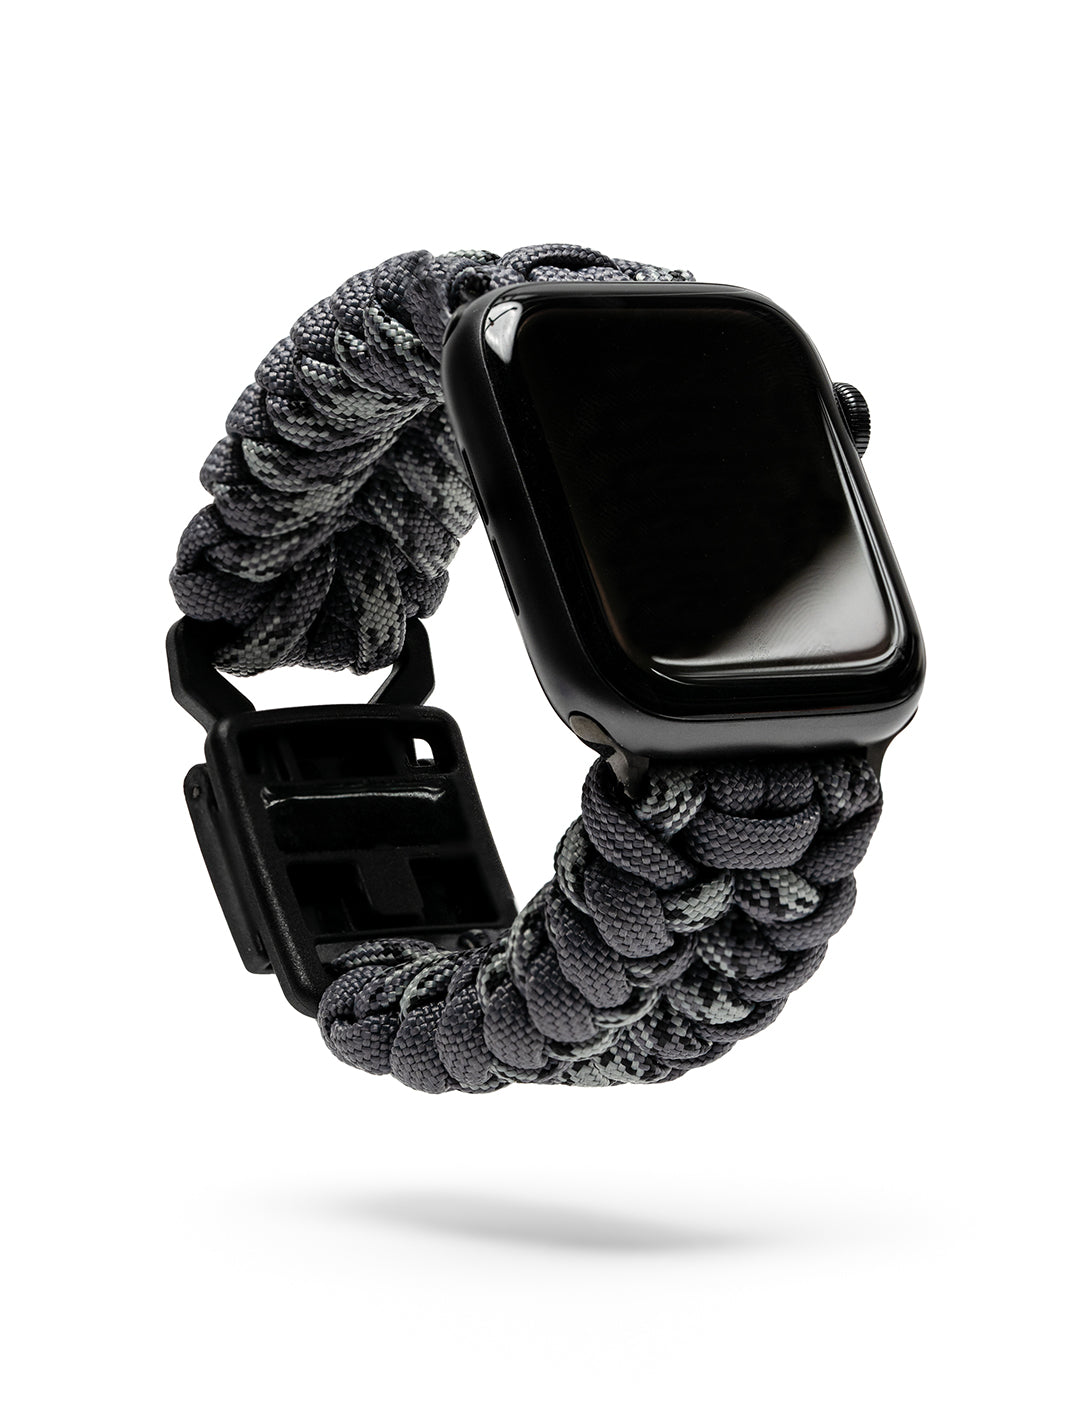 Strapcord Ribs Apple Watch Strap Article 007 Urban Camo 1 1065 x 1420